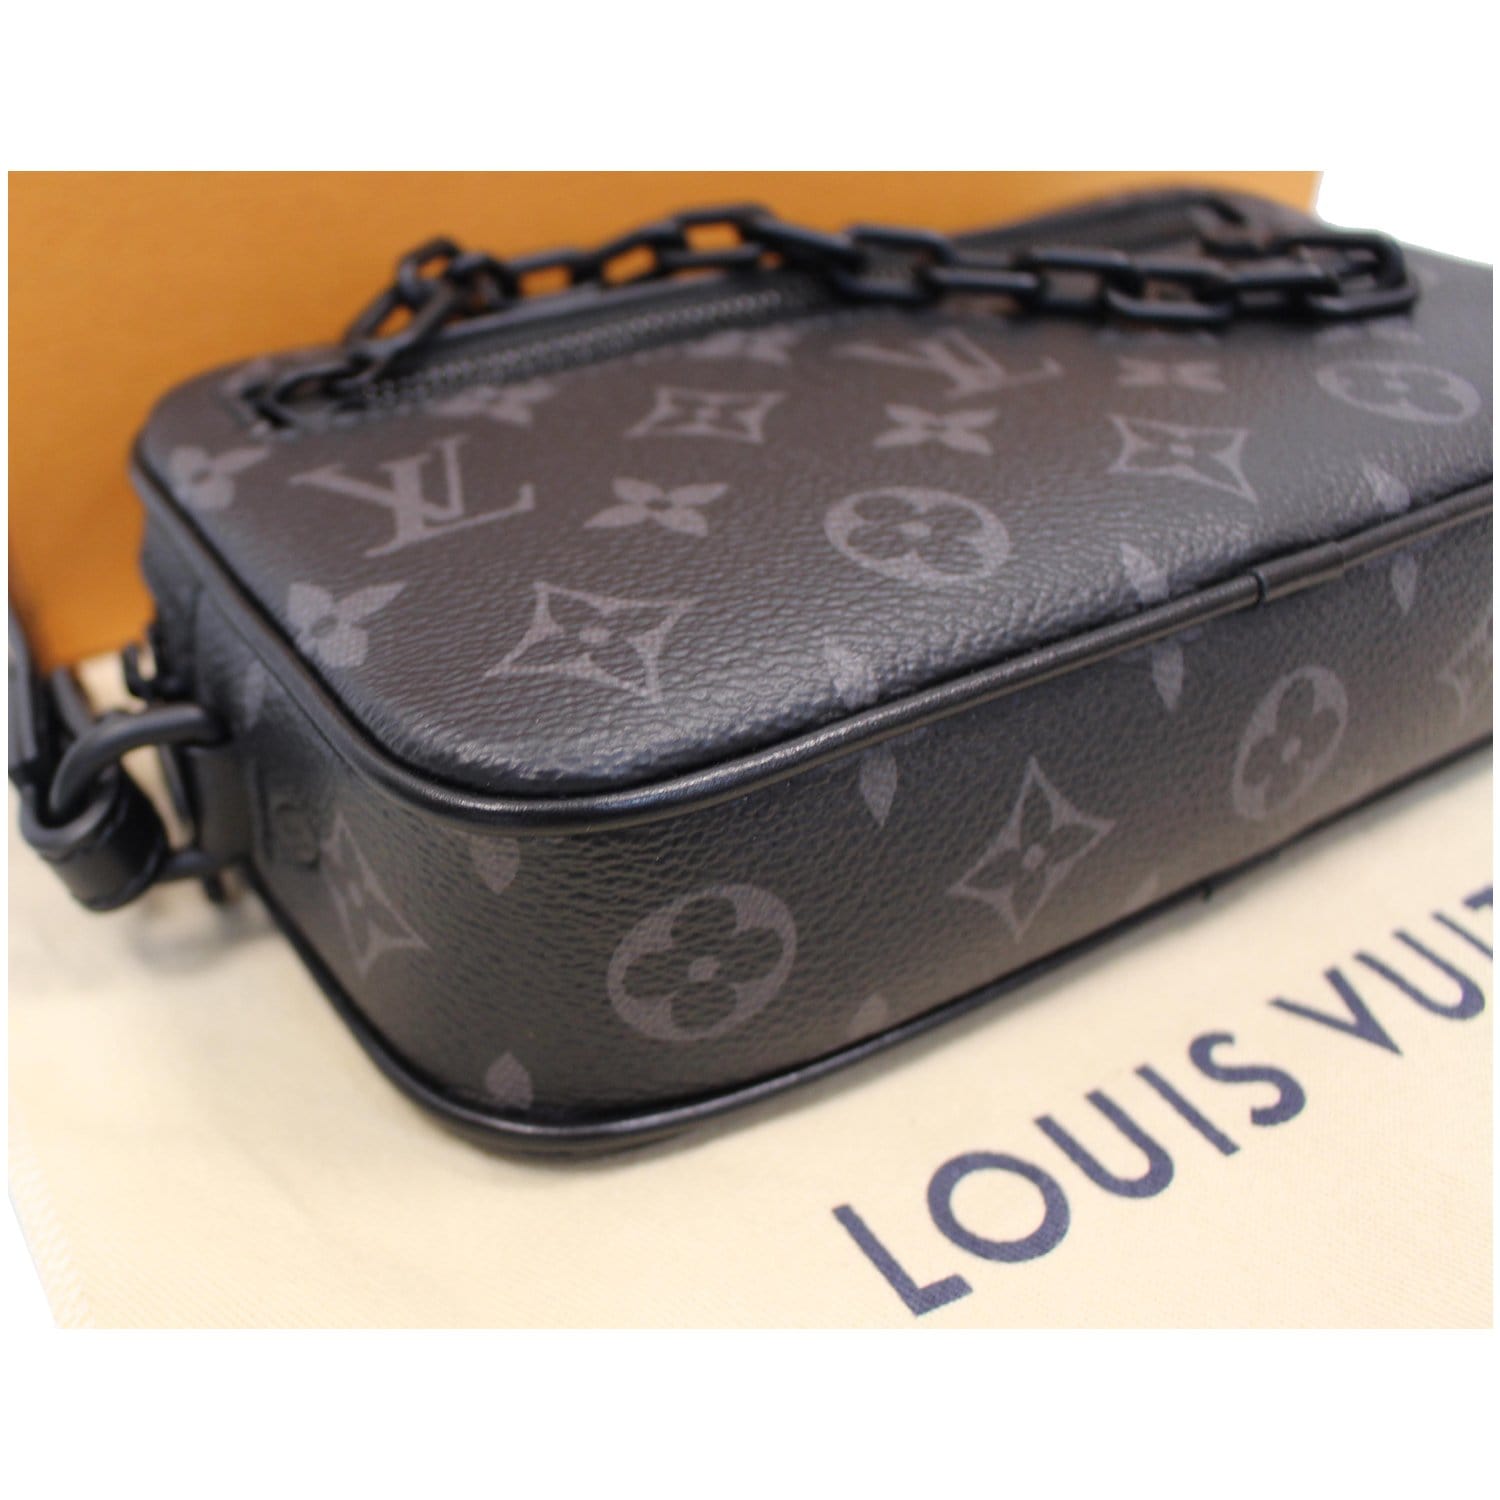 LOUIS VUITTON Volga Monogram Eclipse Pochette Clutch Bag Black